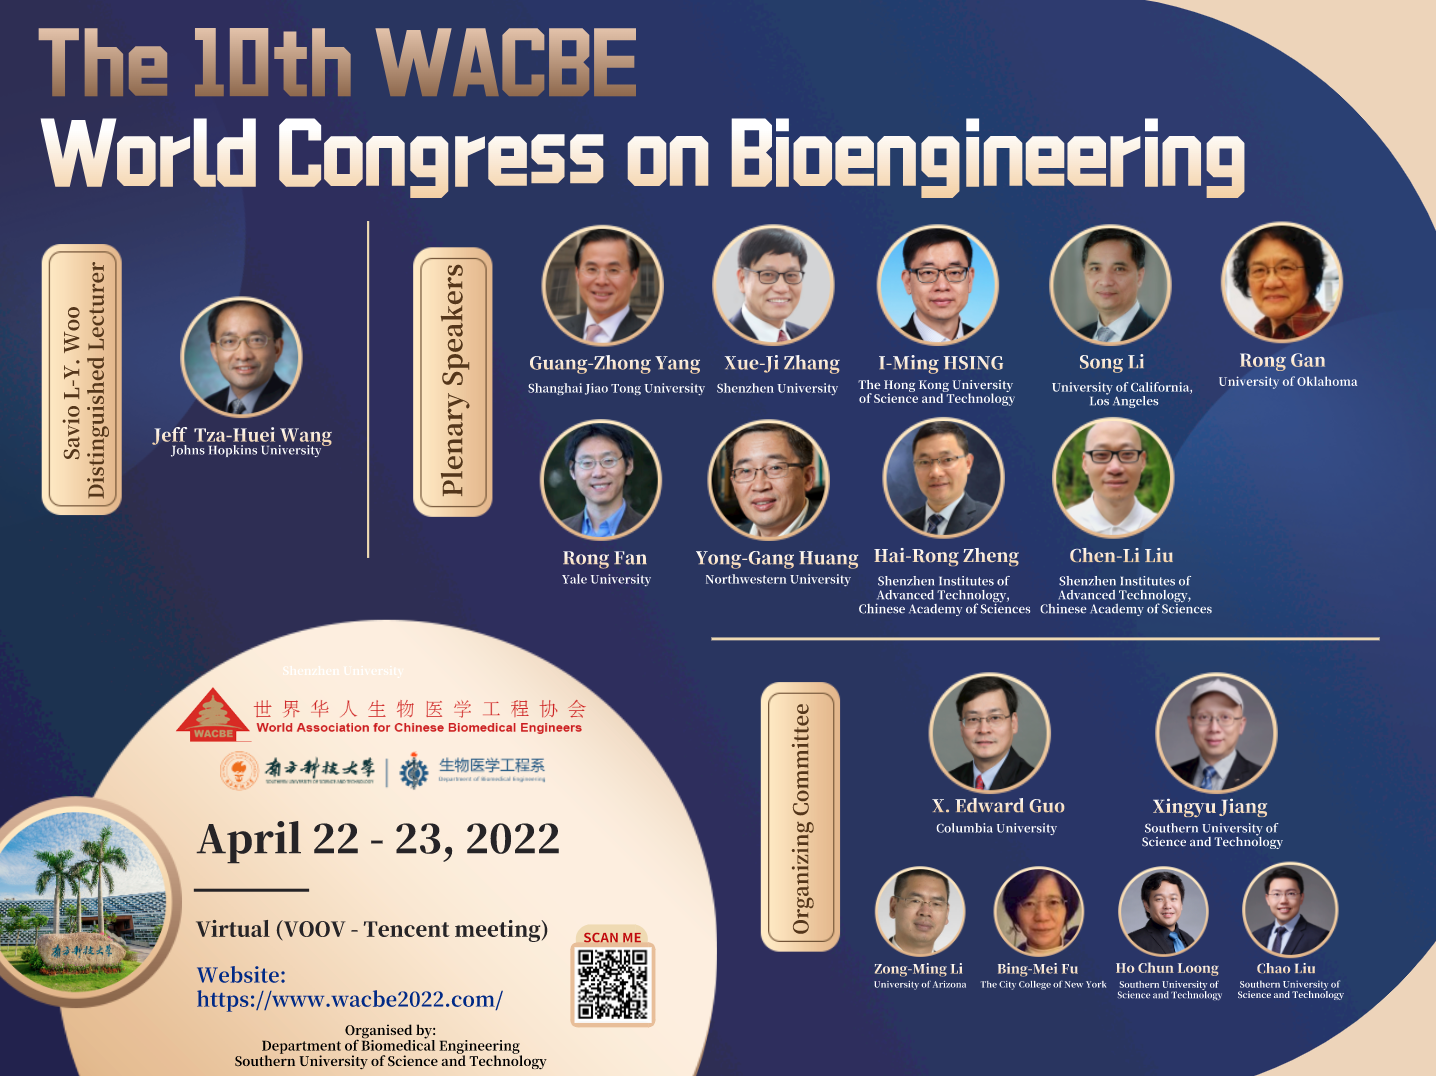 SUSTech hosts 10th WACBE World Congress on Bioengineering